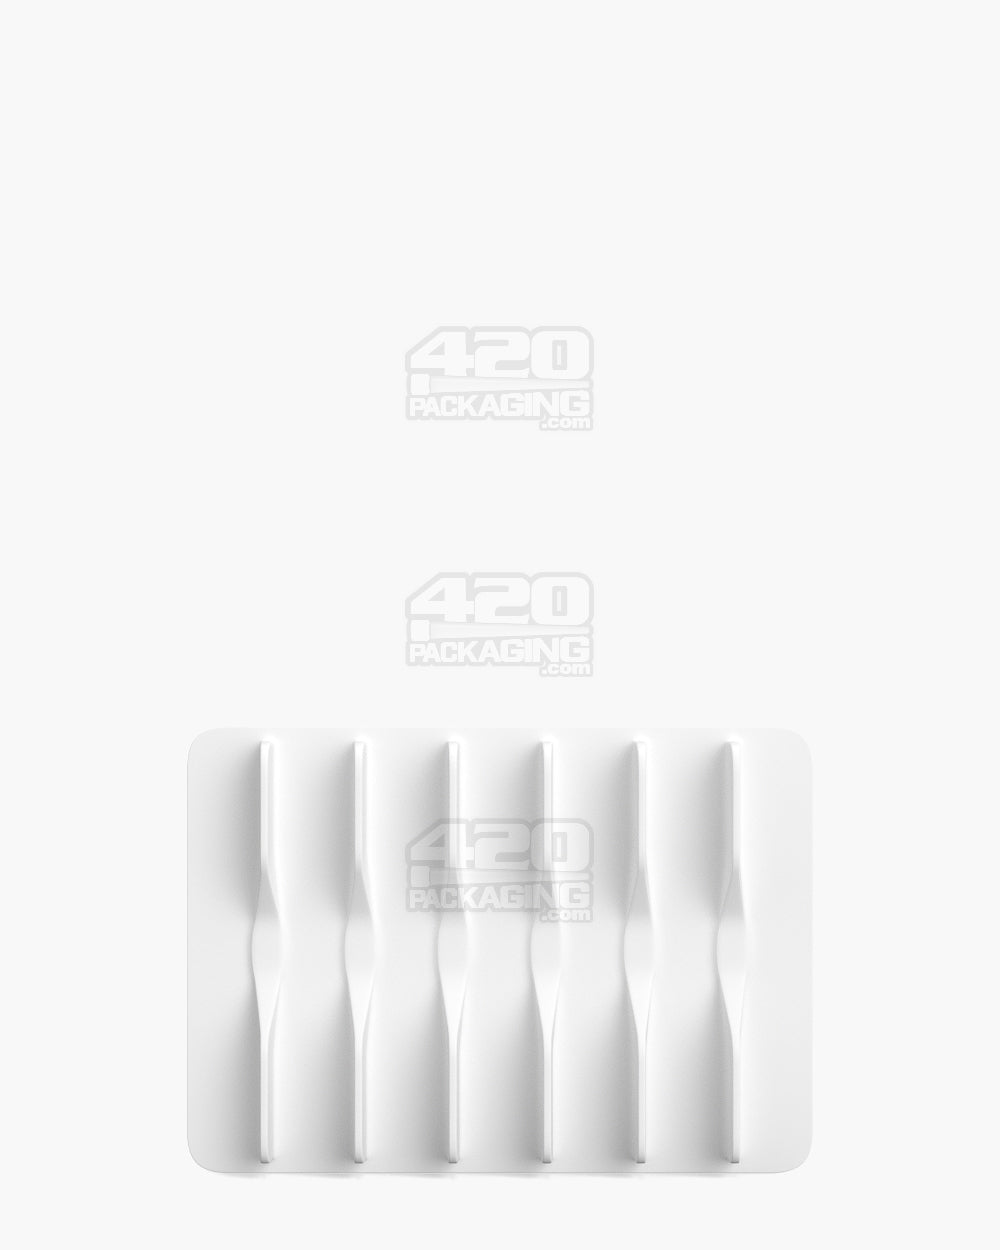 25mm Pollen Gear SnapTech Medium White Plastic Insert Tray Foam 2000/Box - 1